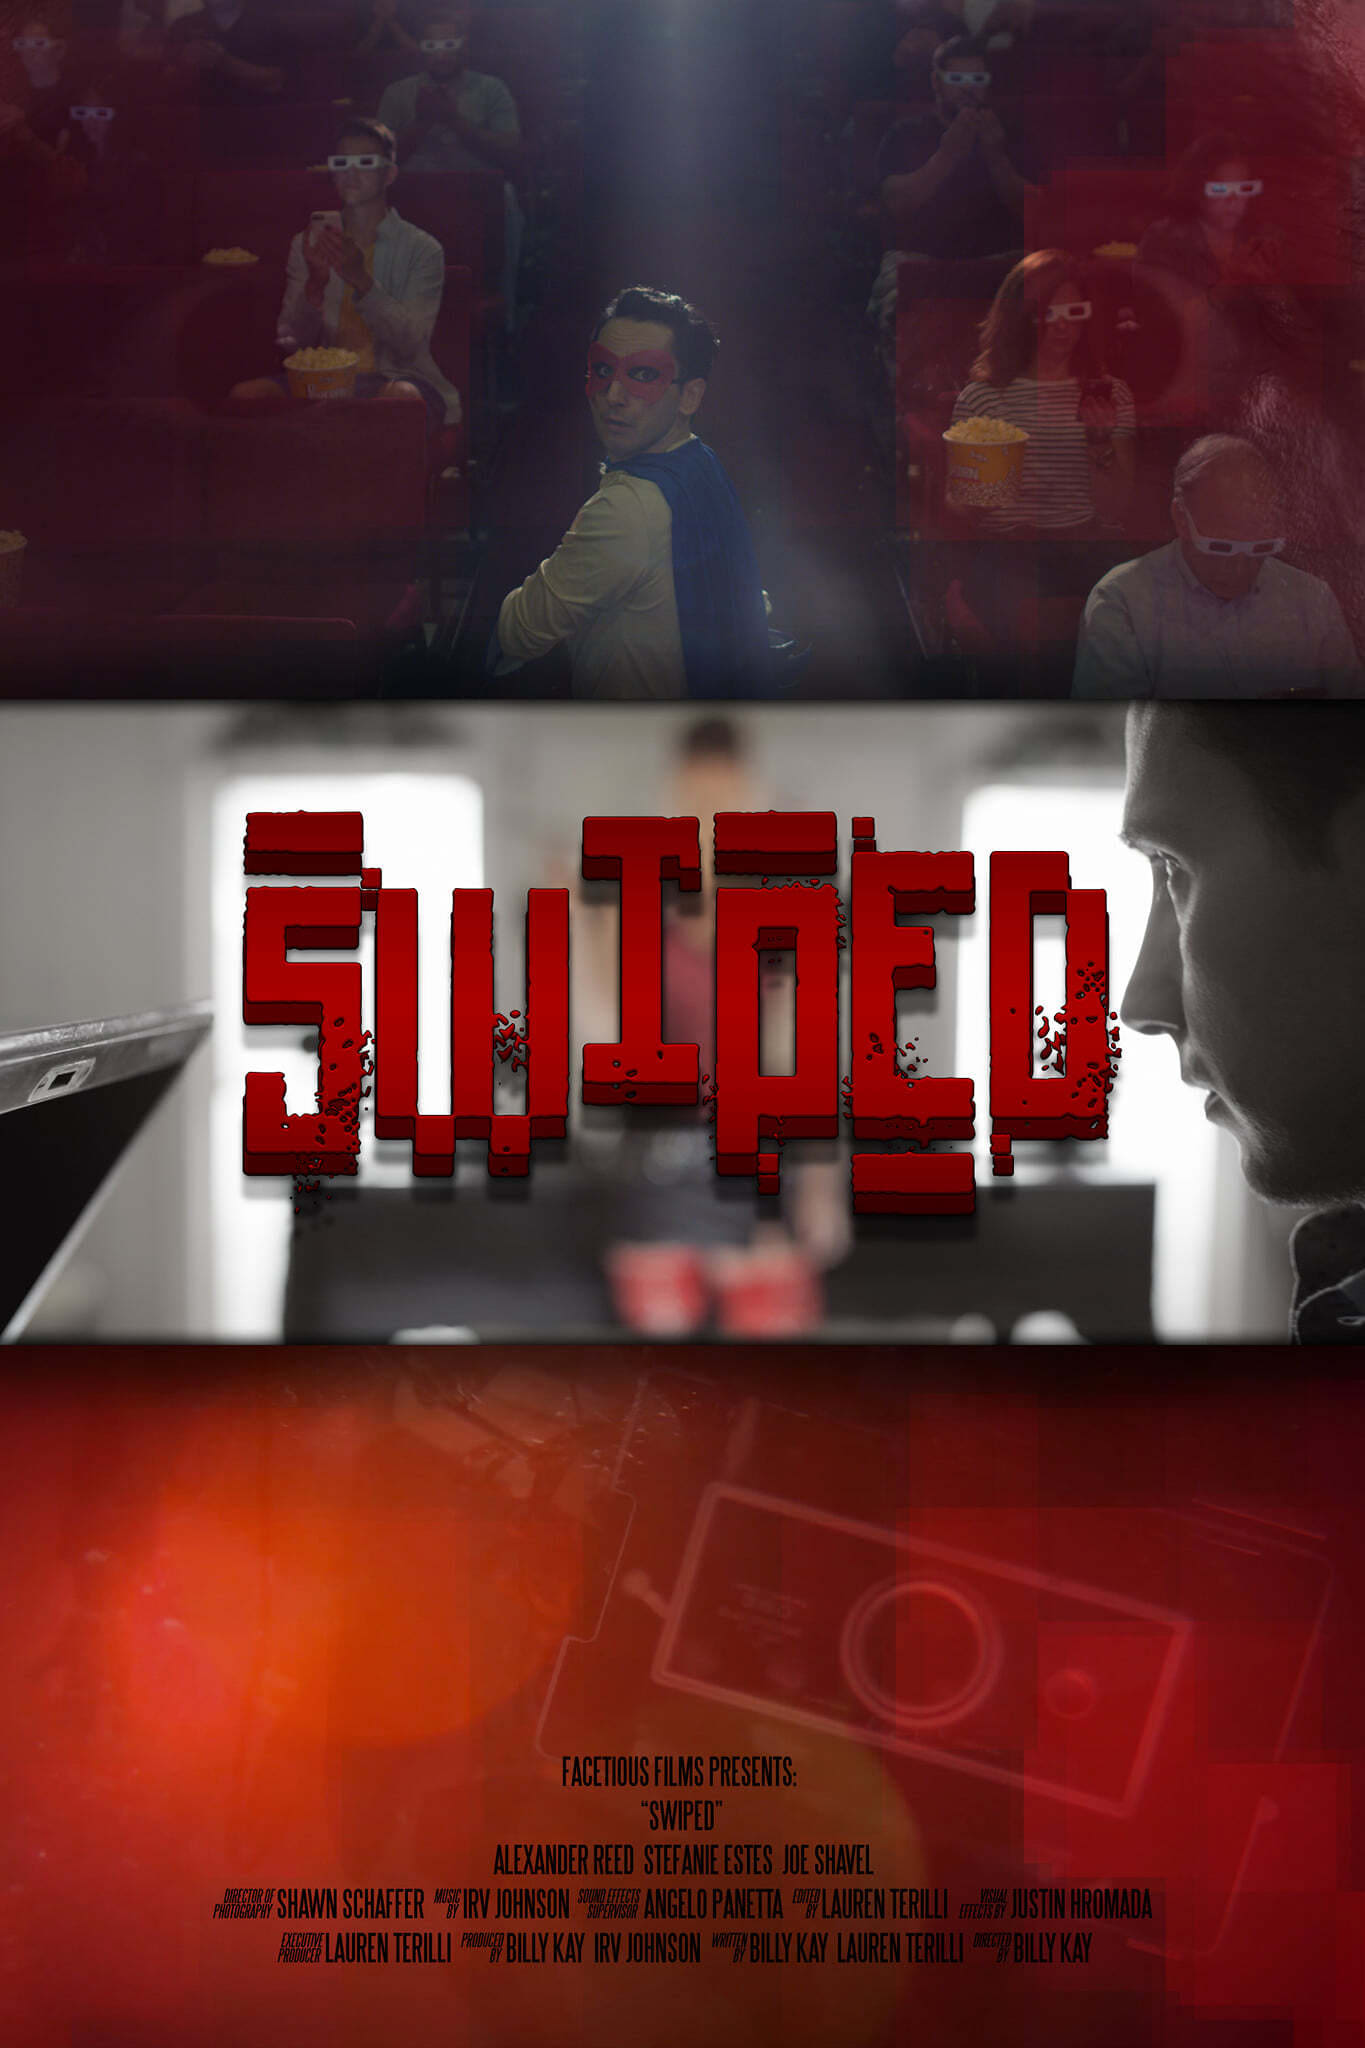 Swiped